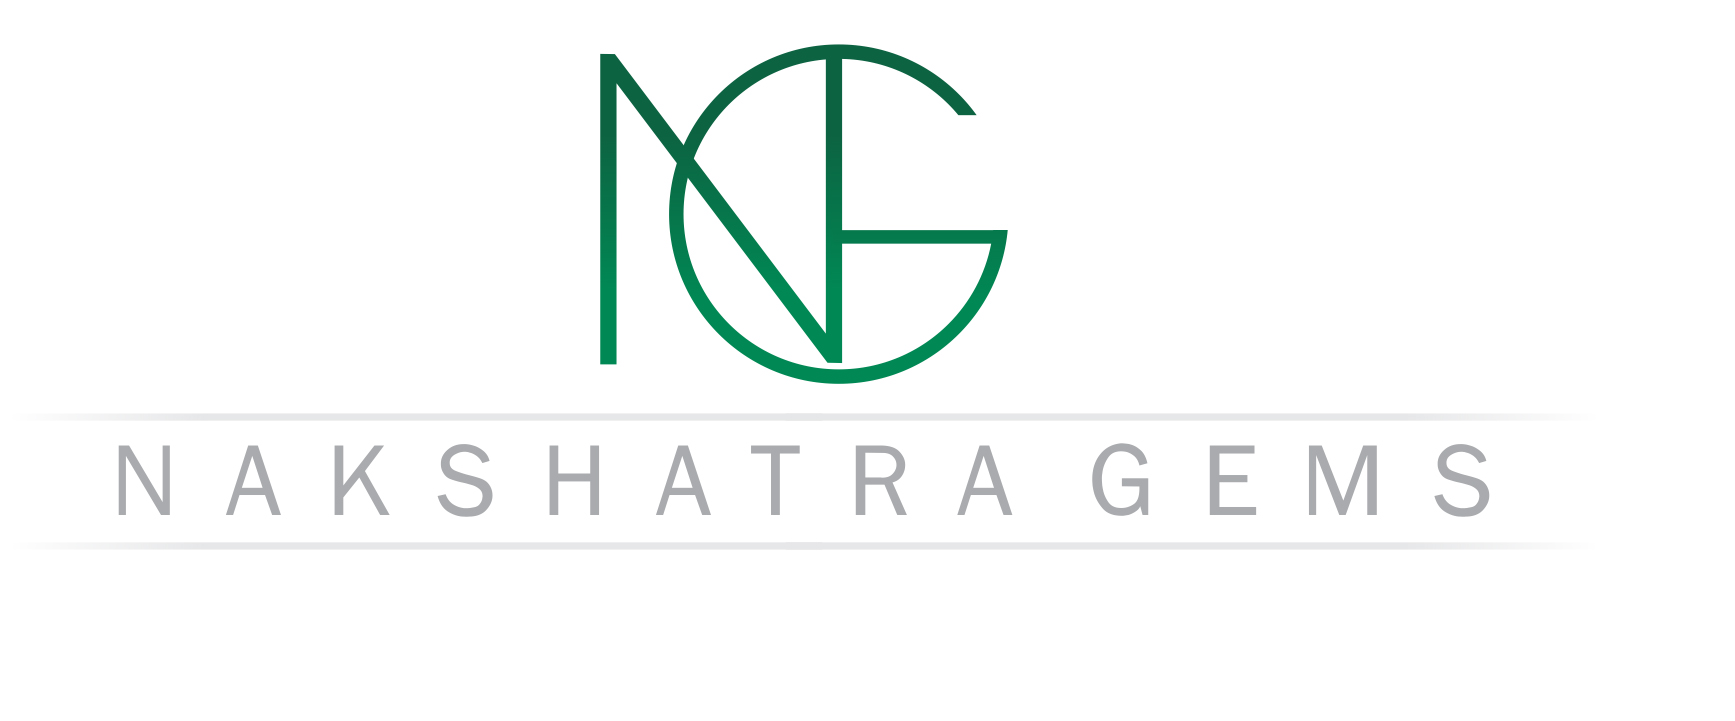 ArtStation - Nakshatra enterprises logo